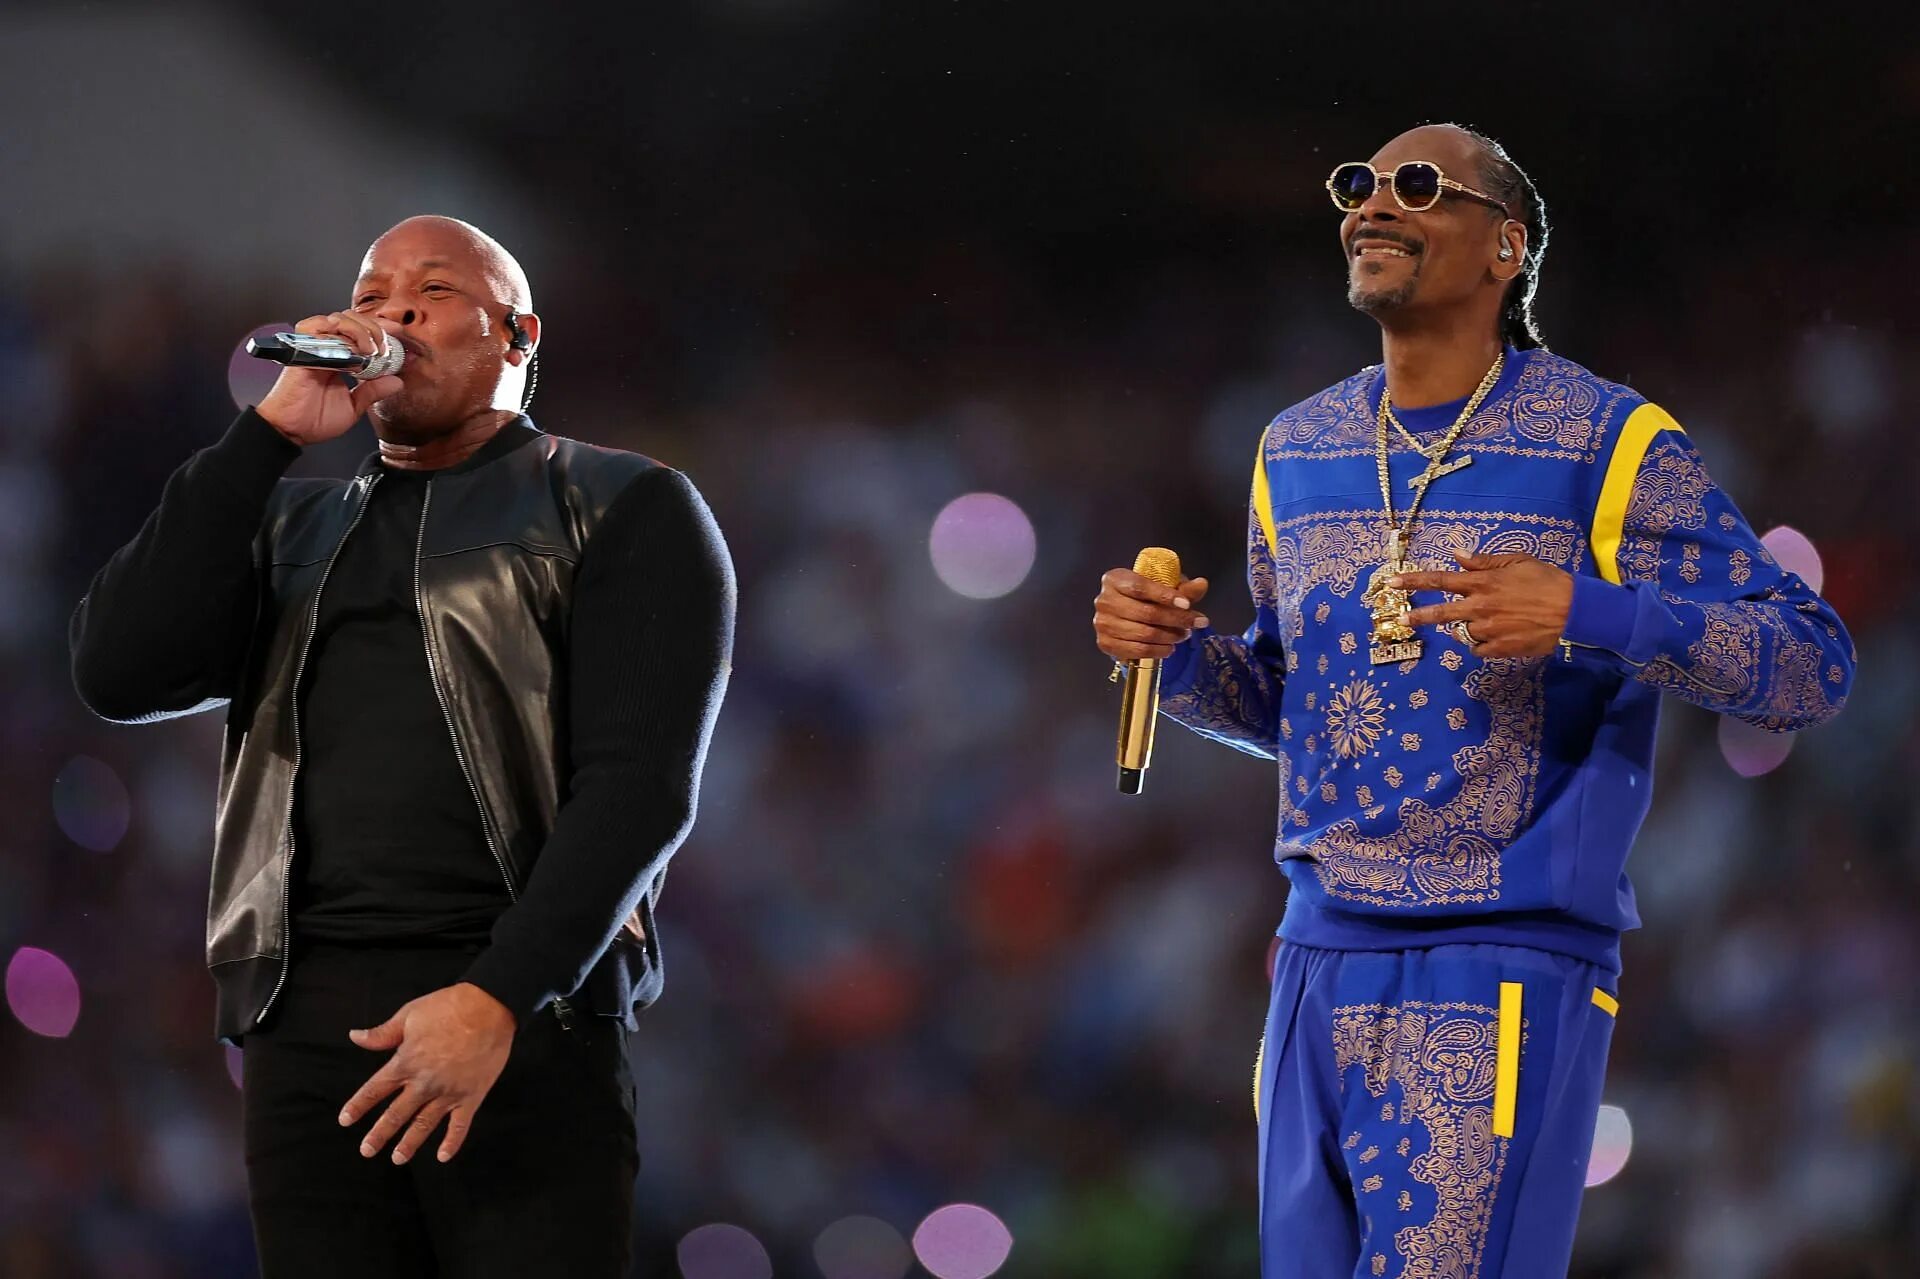 Bowl halftime show. Snoop Dogg super Bowl. Snoop Dogg super Bowl 2022. Super Bowl 2022 Dr. Dre. Доктор Дре снуп дог концерт стадионе.